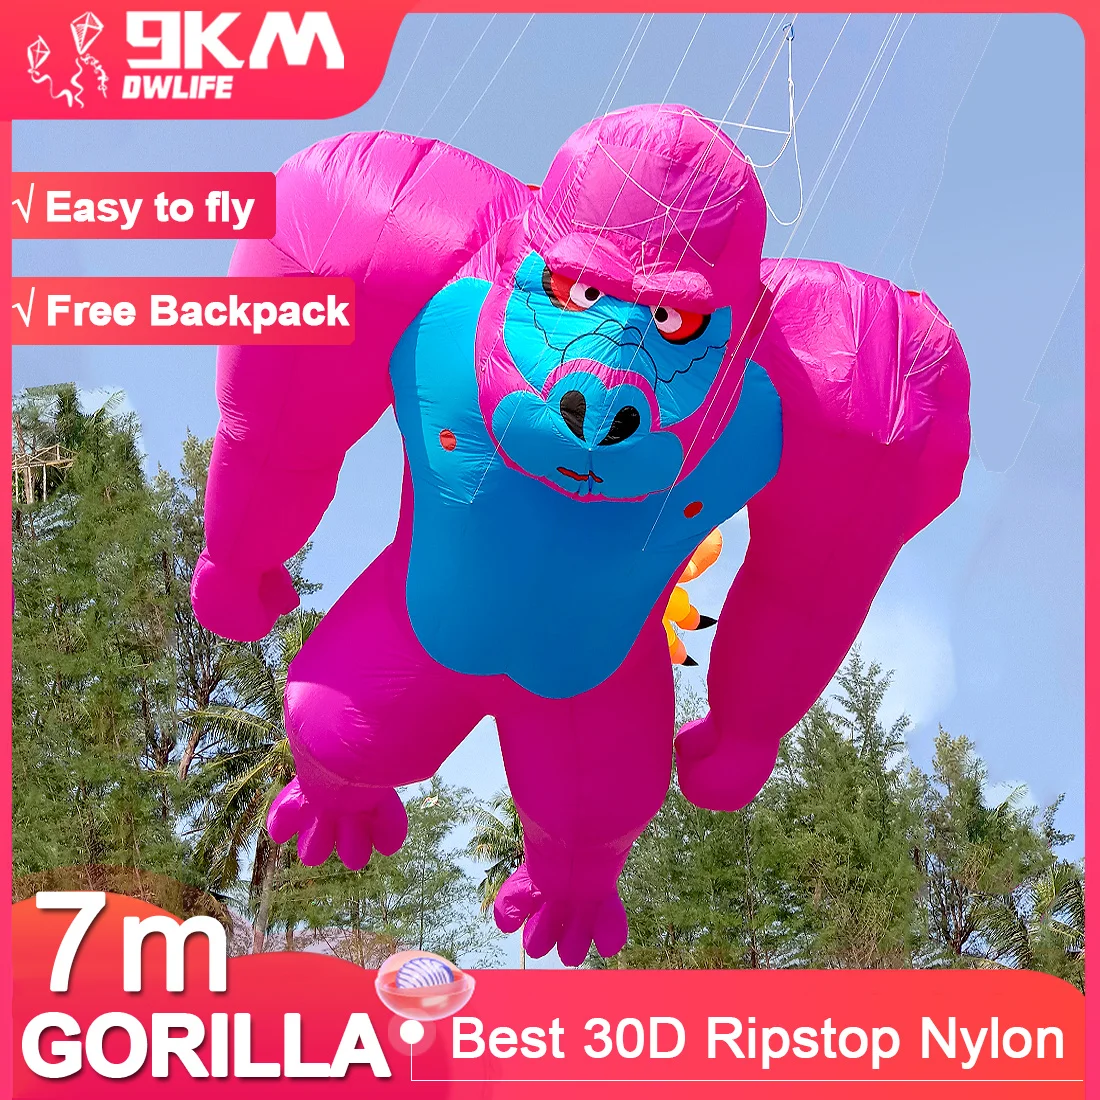 

9KM Giant 7m Gorilla Kite Line Laundry Soft Inflatable Outdoor Pendant Show Kite for Kite Festival 30D Ripstop Nylon with Bag